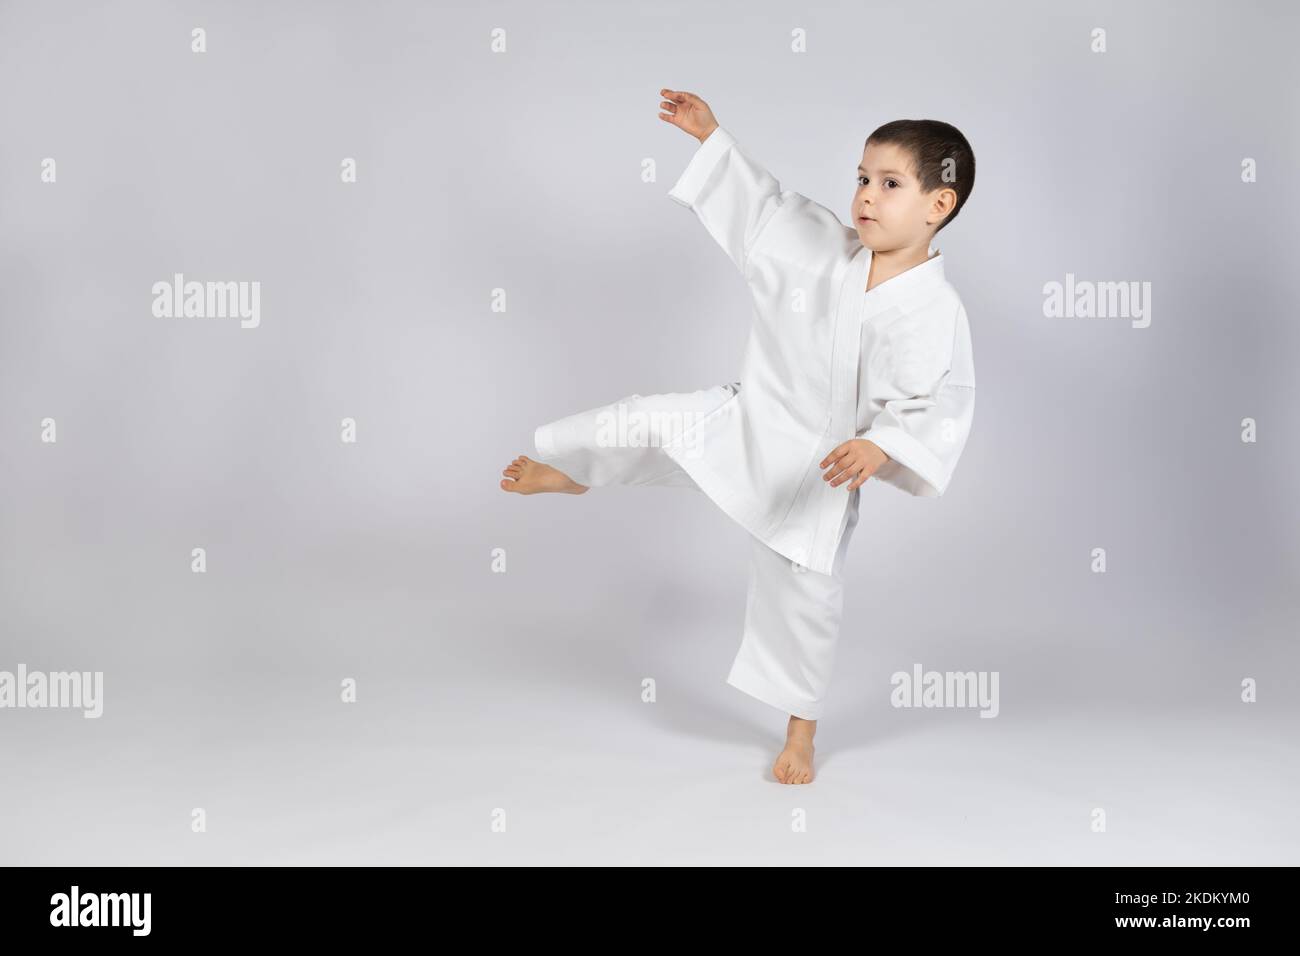 A little boy in a kimono practices karate on a white background, kicking forward. Stock Photo